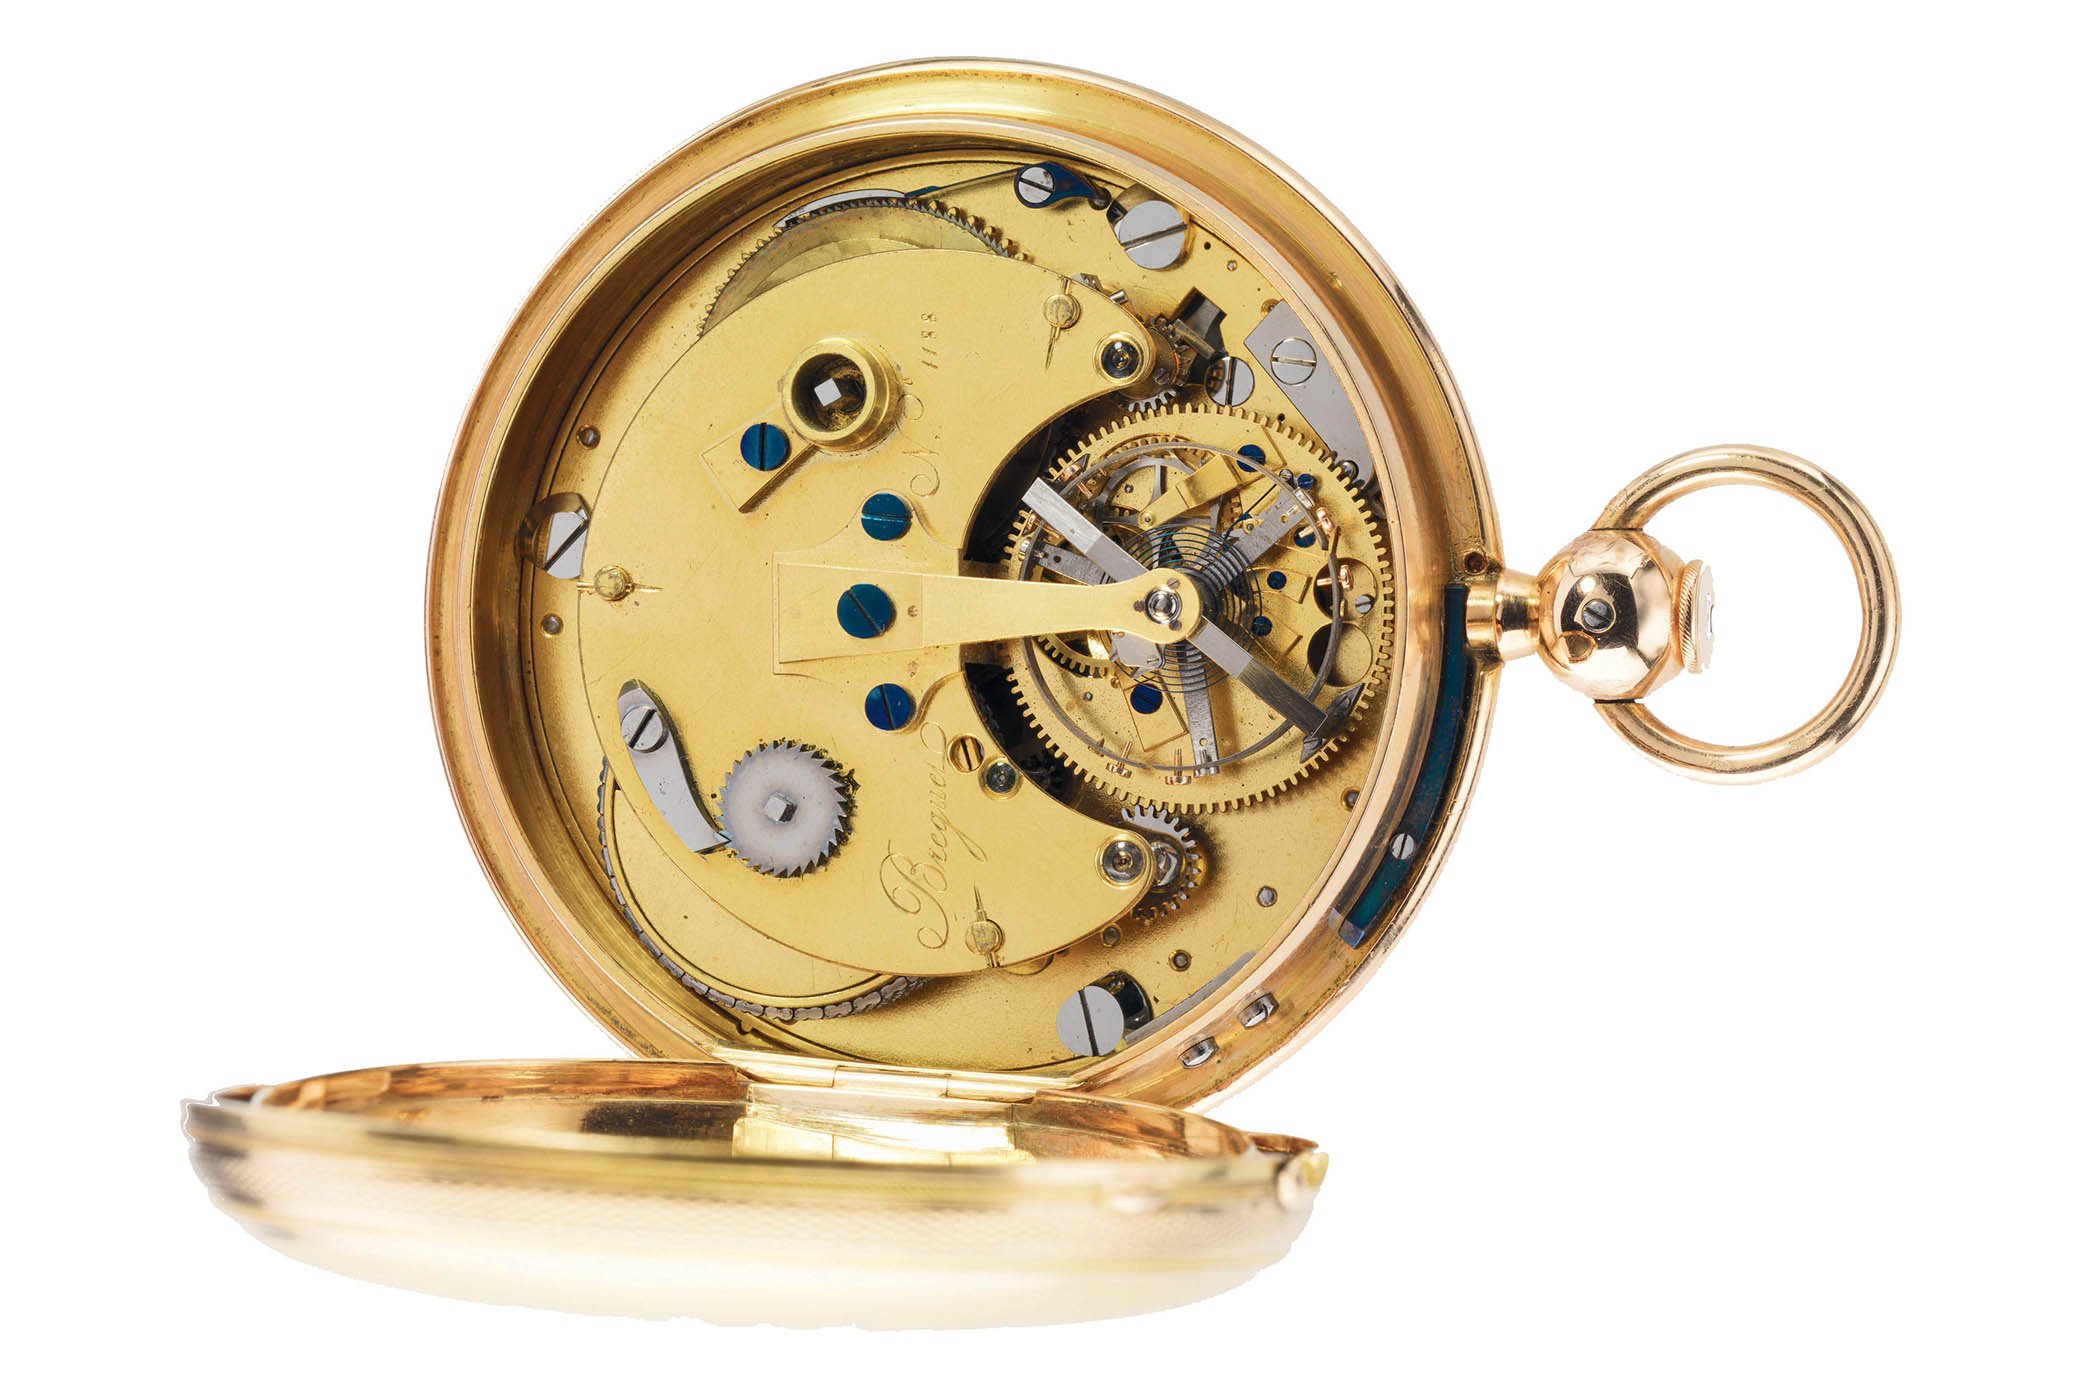 Breguet tourbillon precision pocket-watch No. 1188